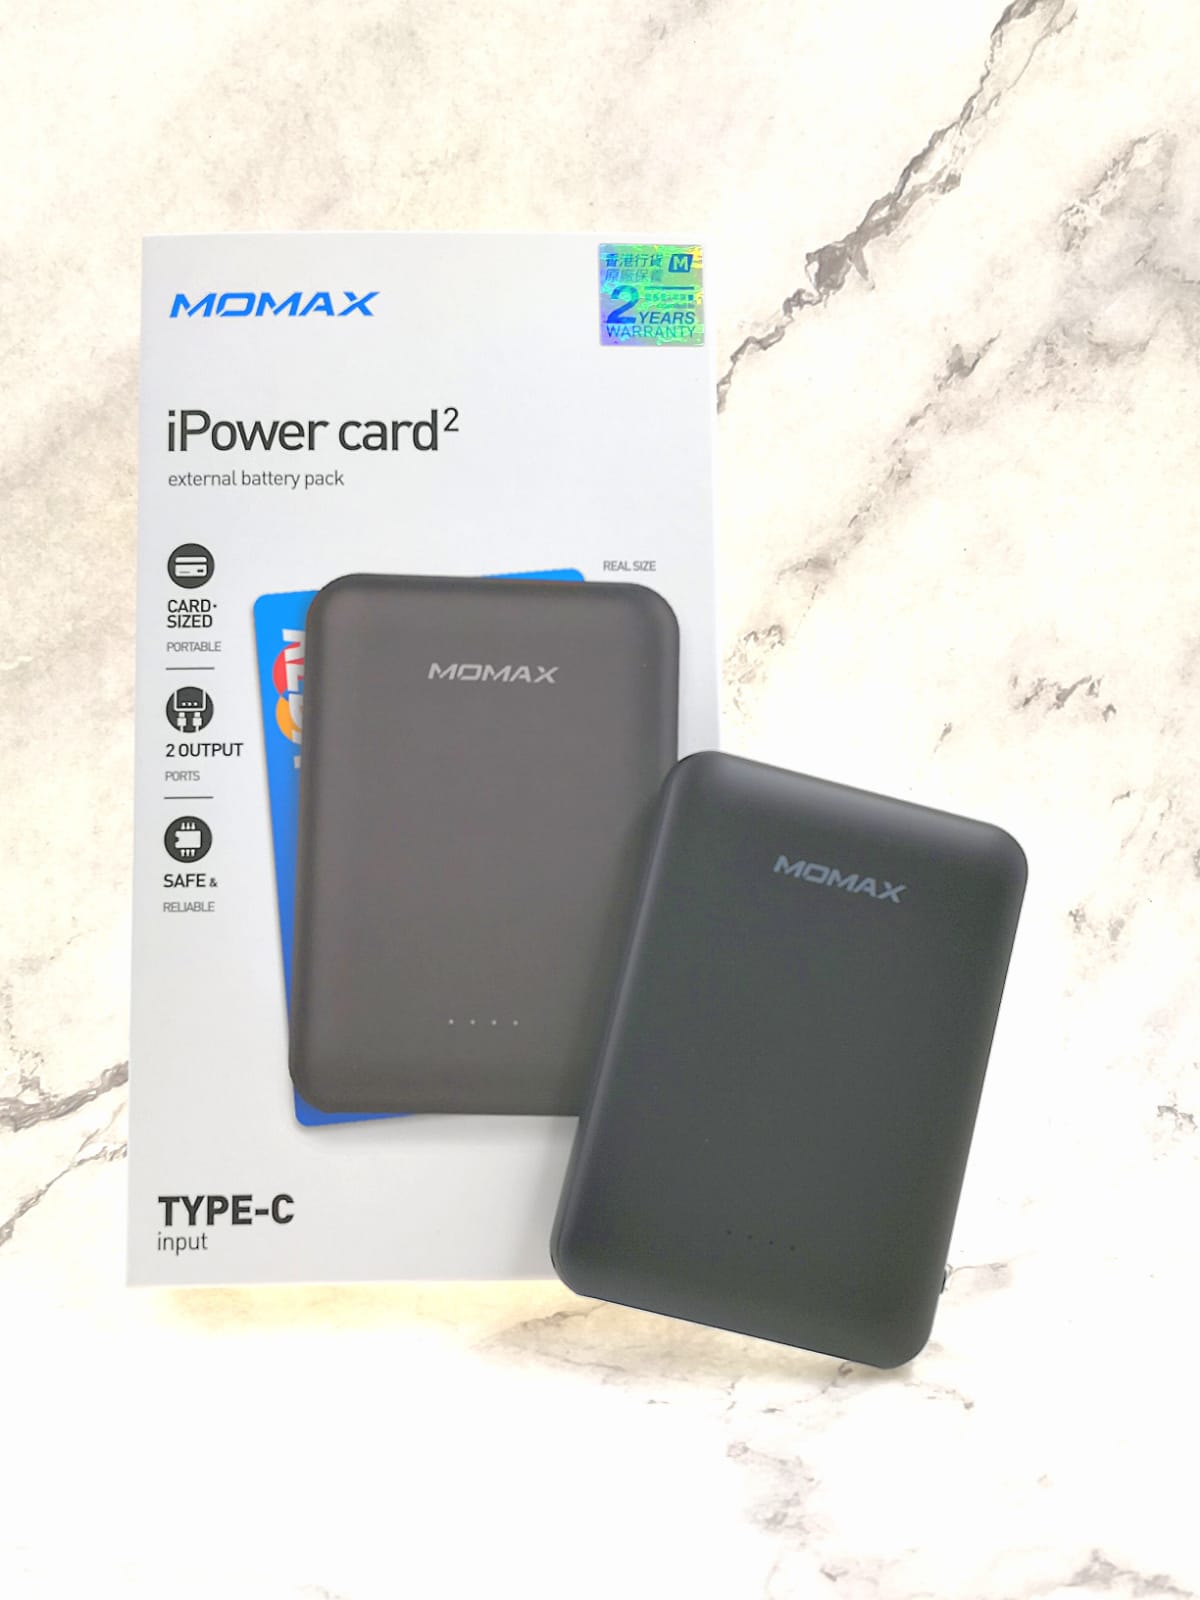 Momax iPower card2 - external battery pack